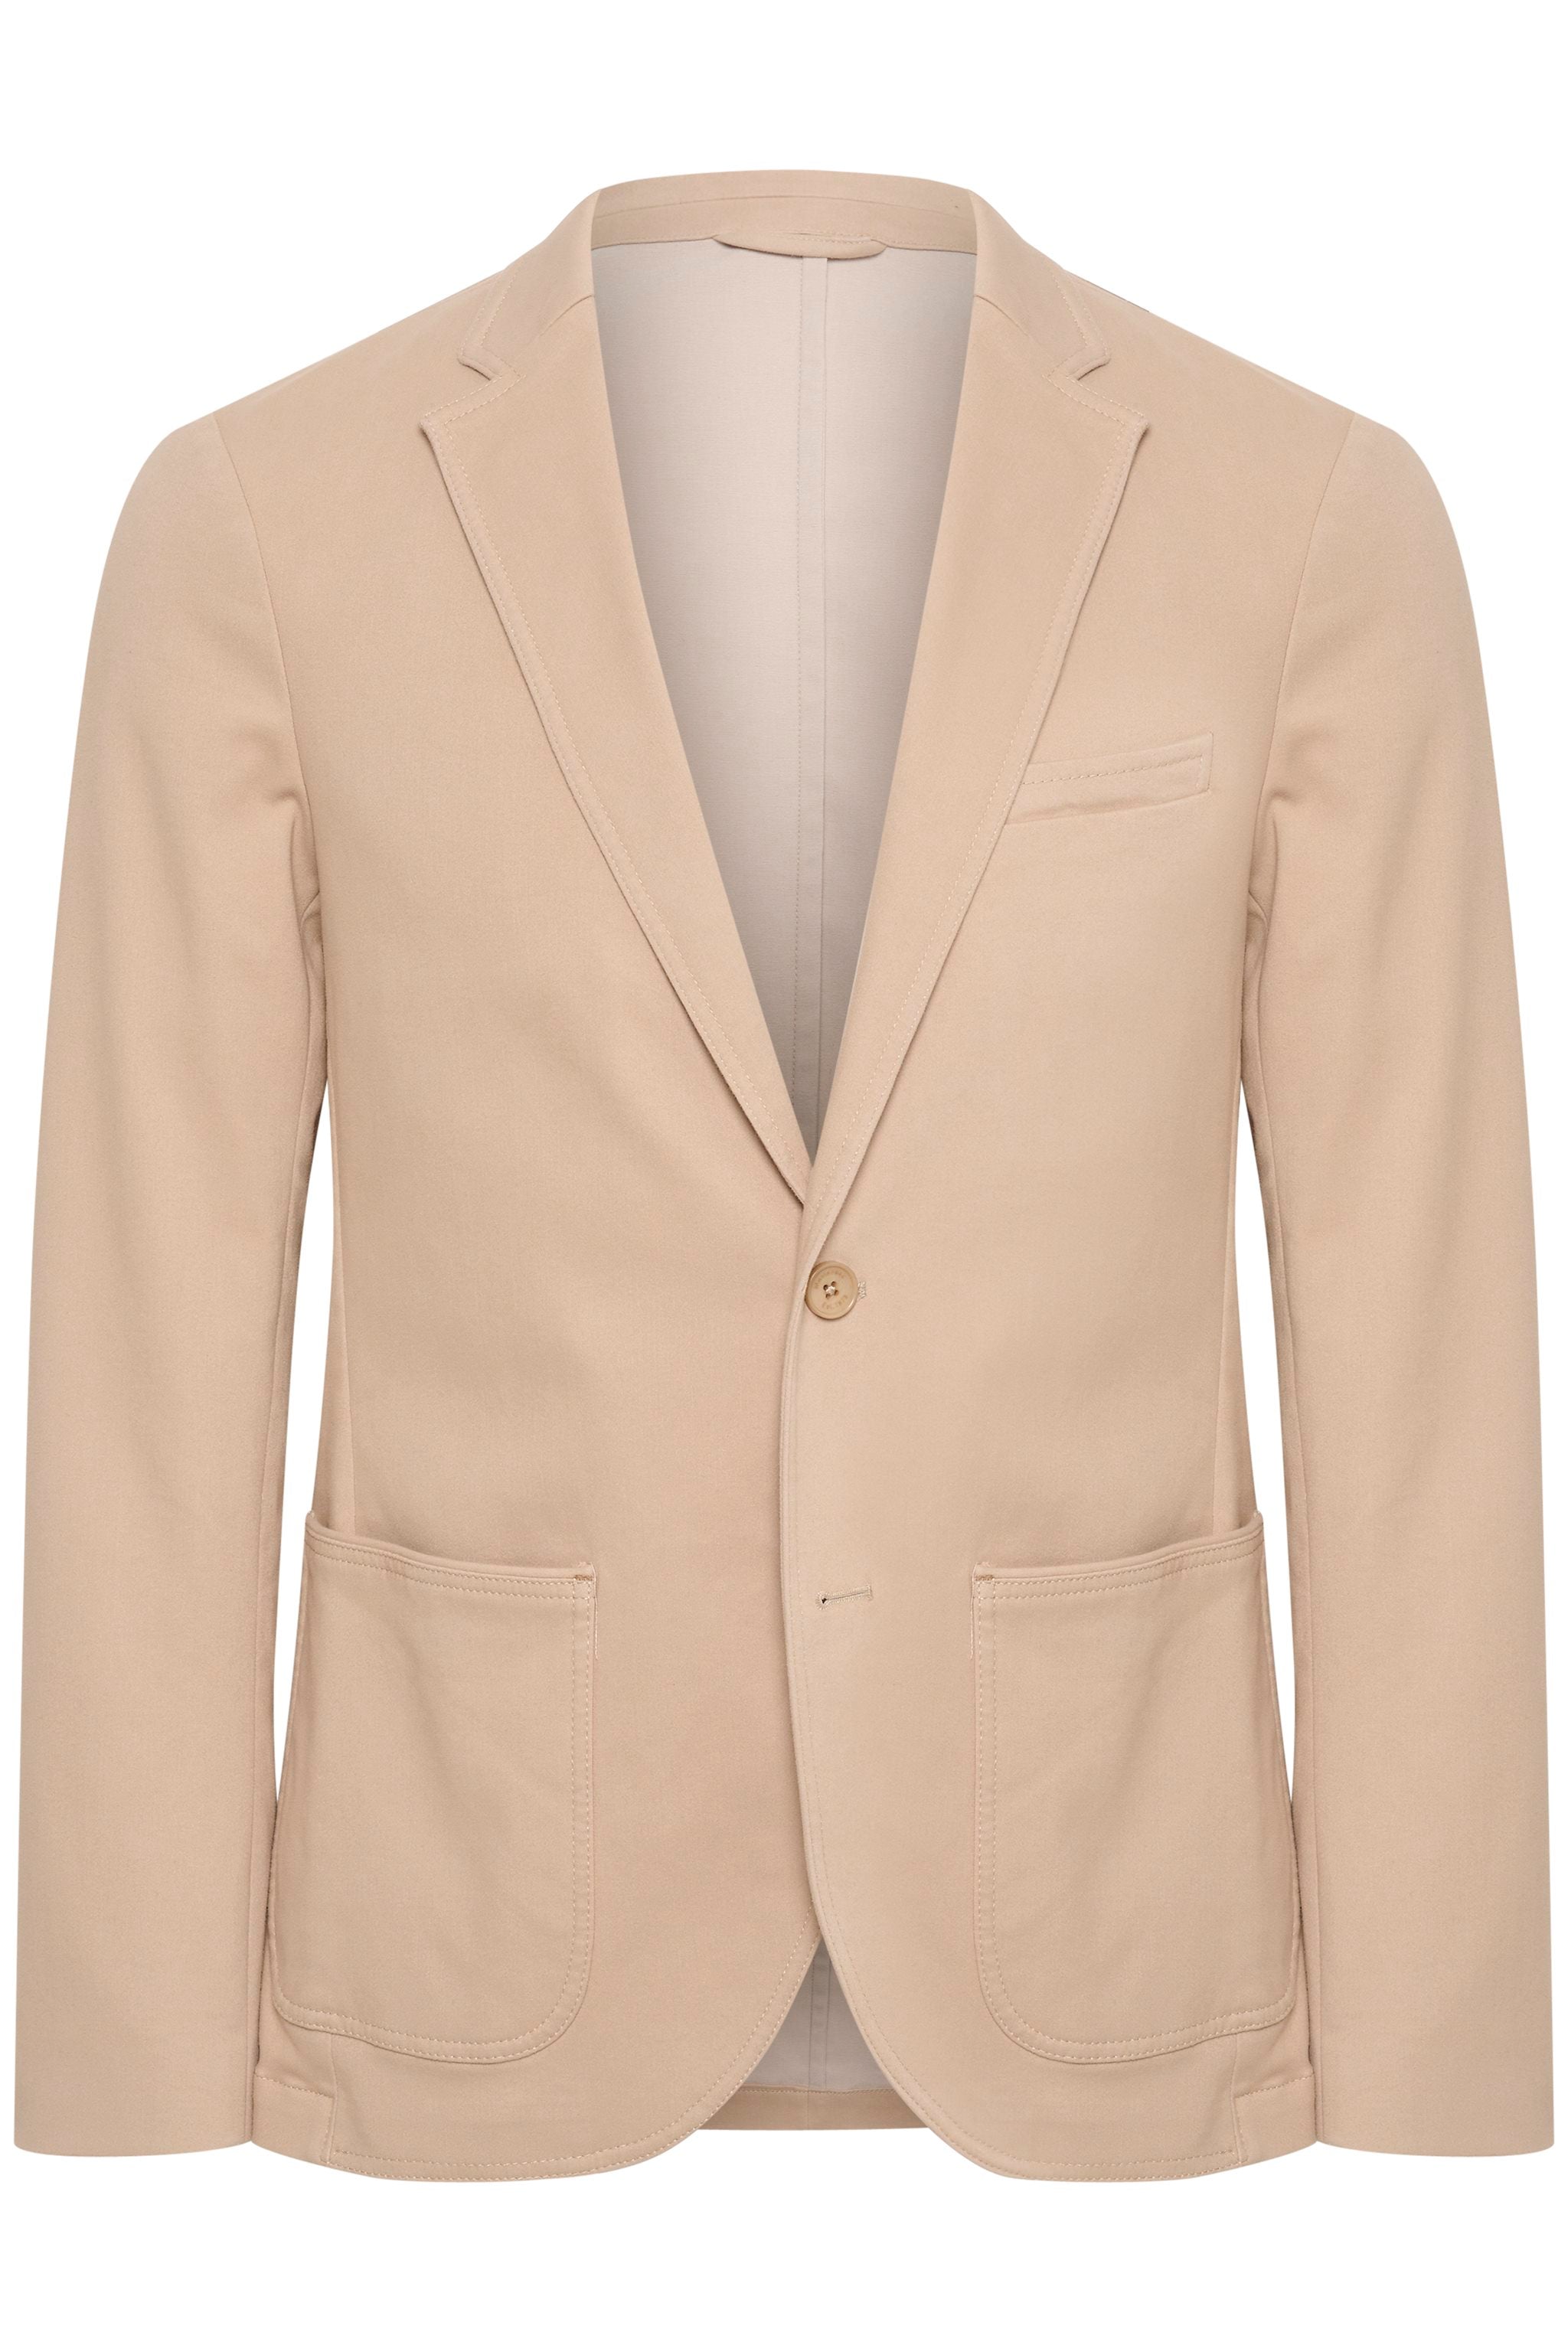 George Suede Sport Coat, Winters blazer jacket, sports blazer, Winters jacket, Sports blazers for men